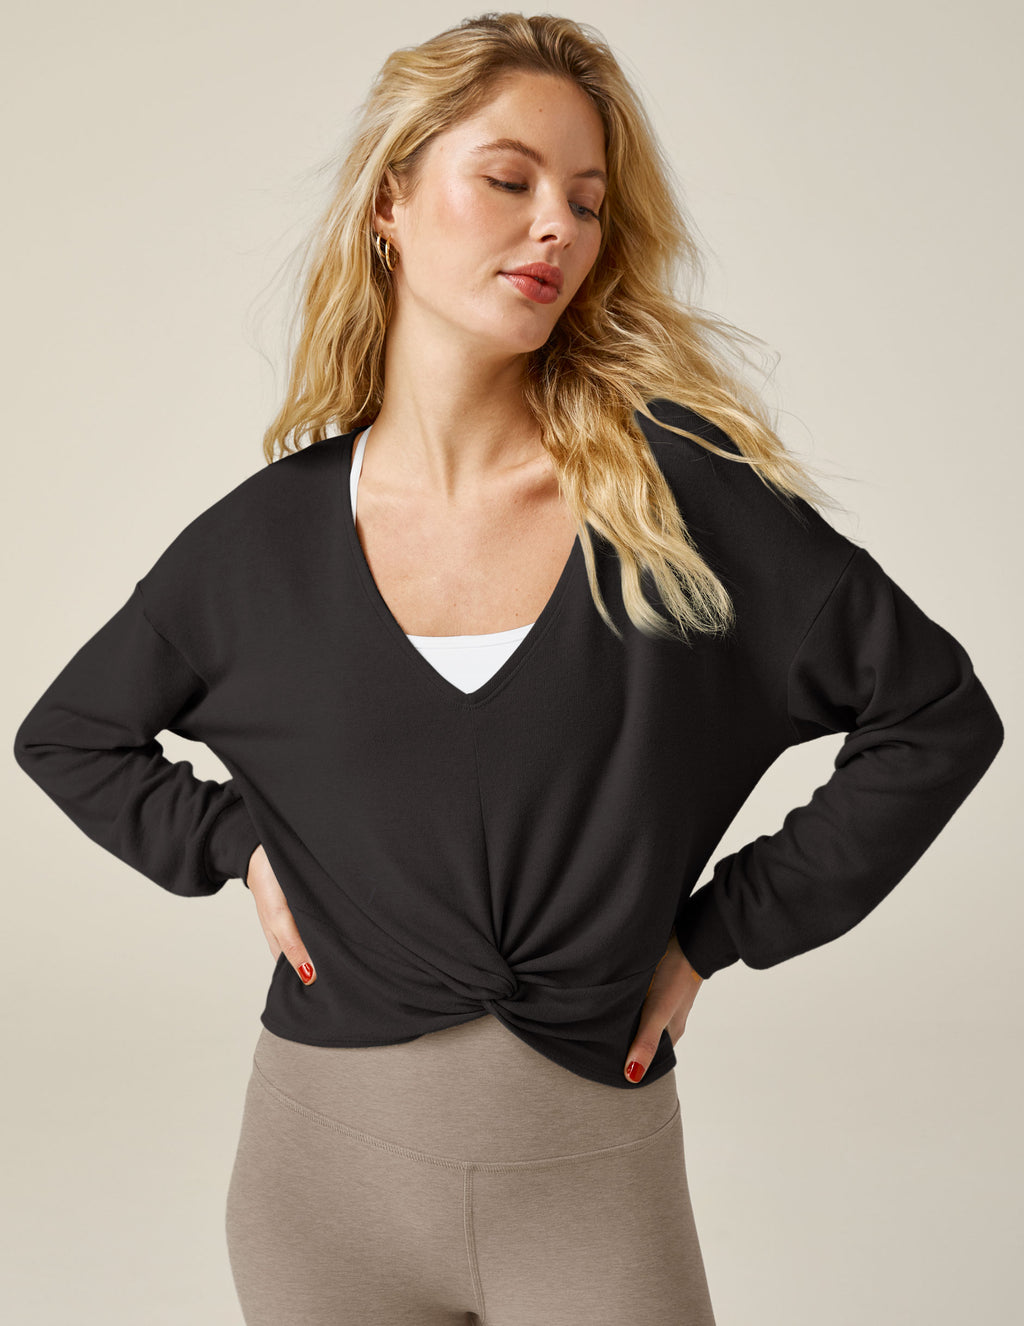  Jackets For Women BBL Yoga Sweater Zip Up Long